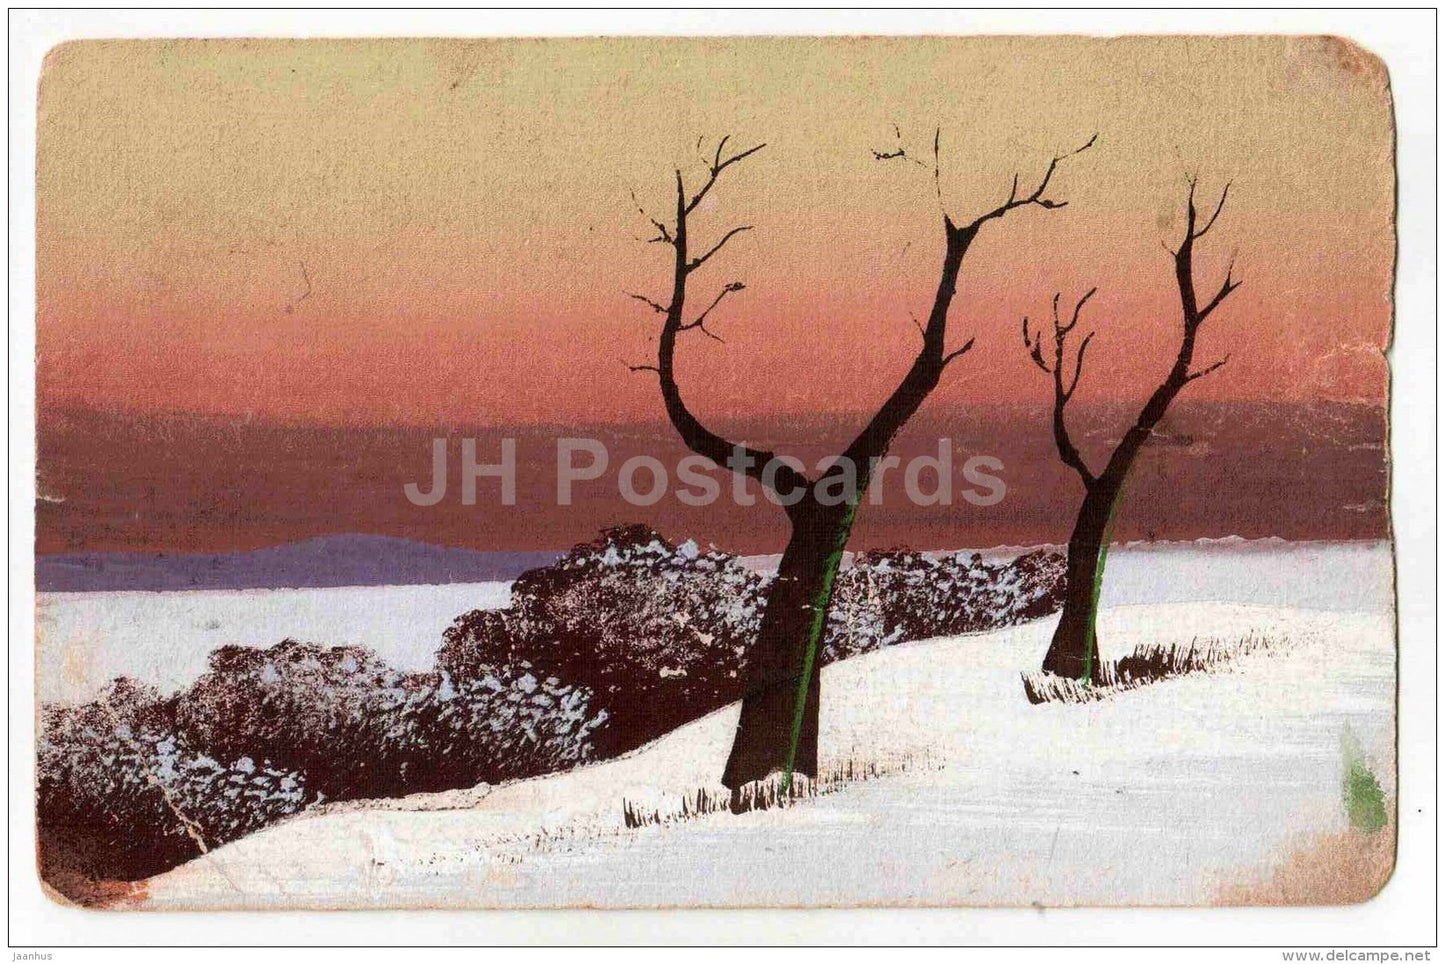 wintwr landscape - trees - illustration - circulated in Estonia Mail Wagon Pärnu-Tallinn 1927 - JH Postcards